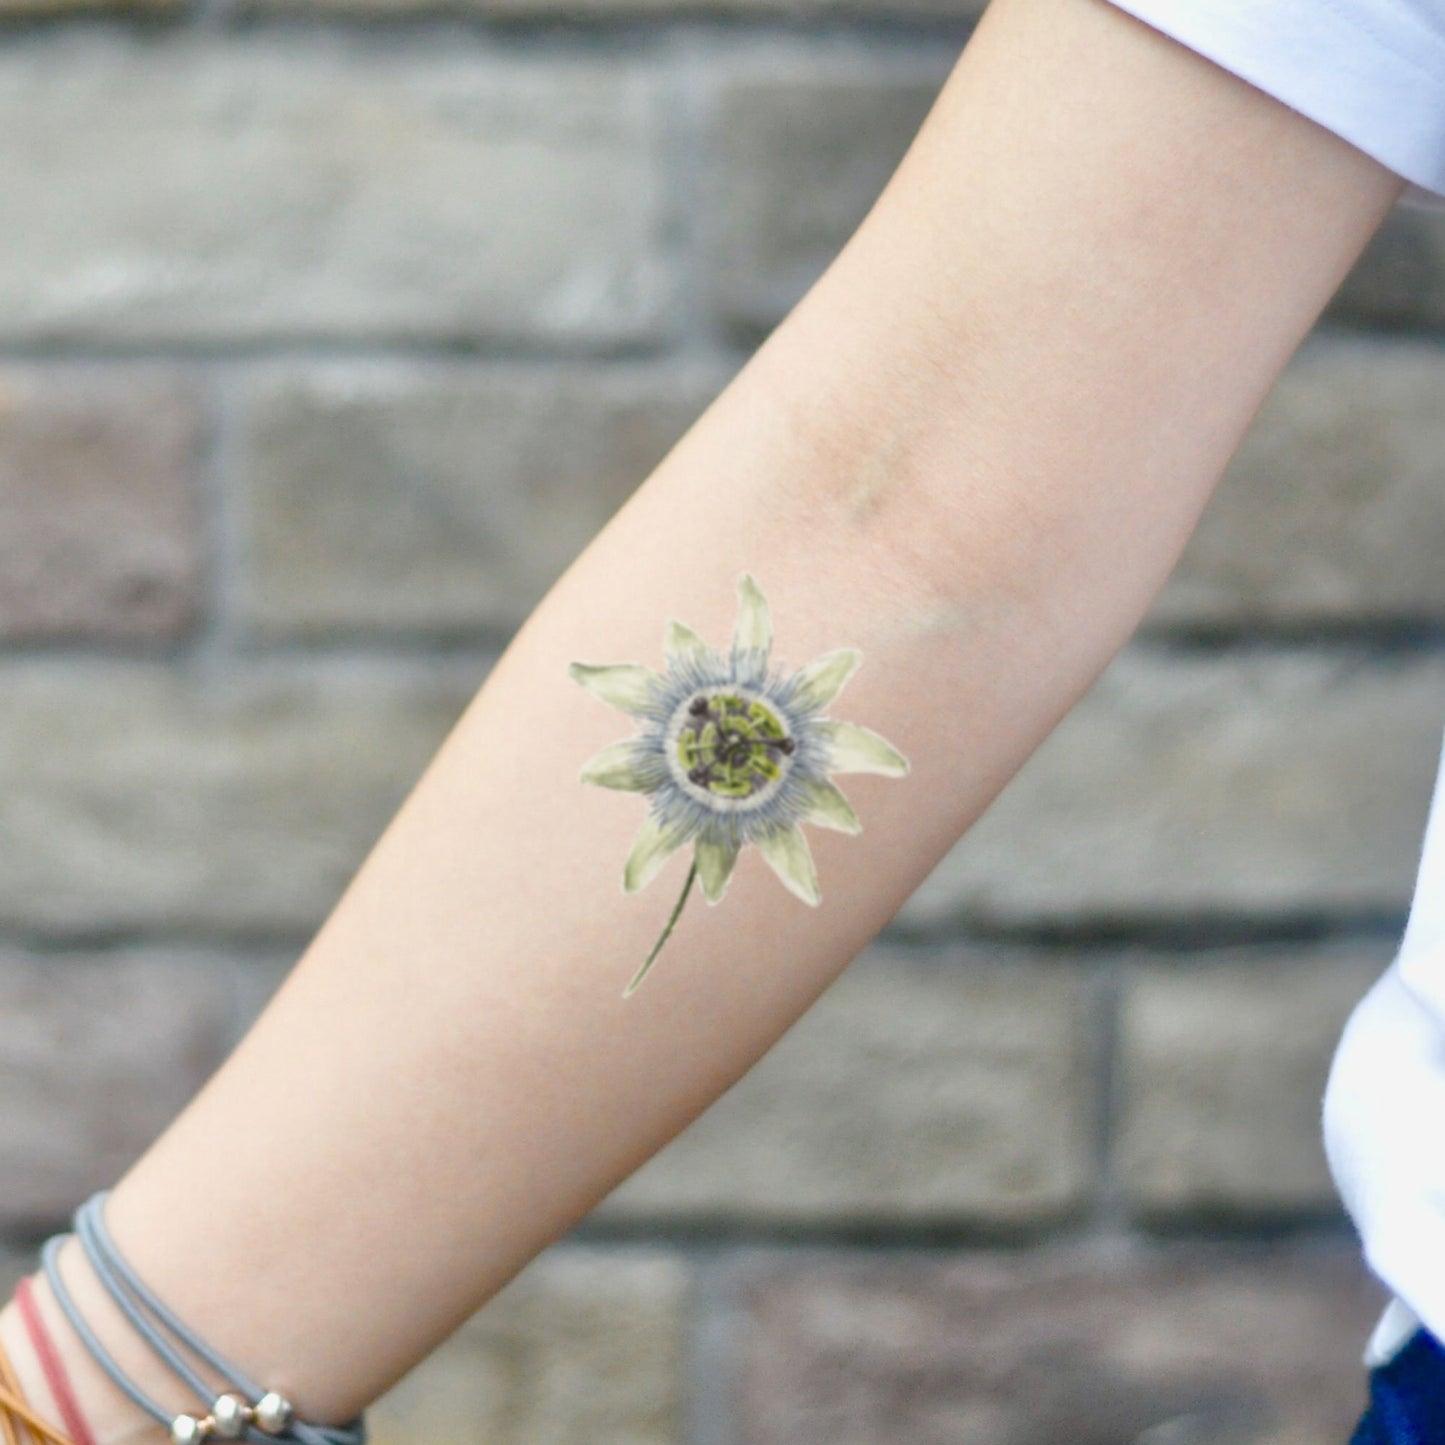 fake small passion flower flower temporary tattoo sticker design idea on inner arm